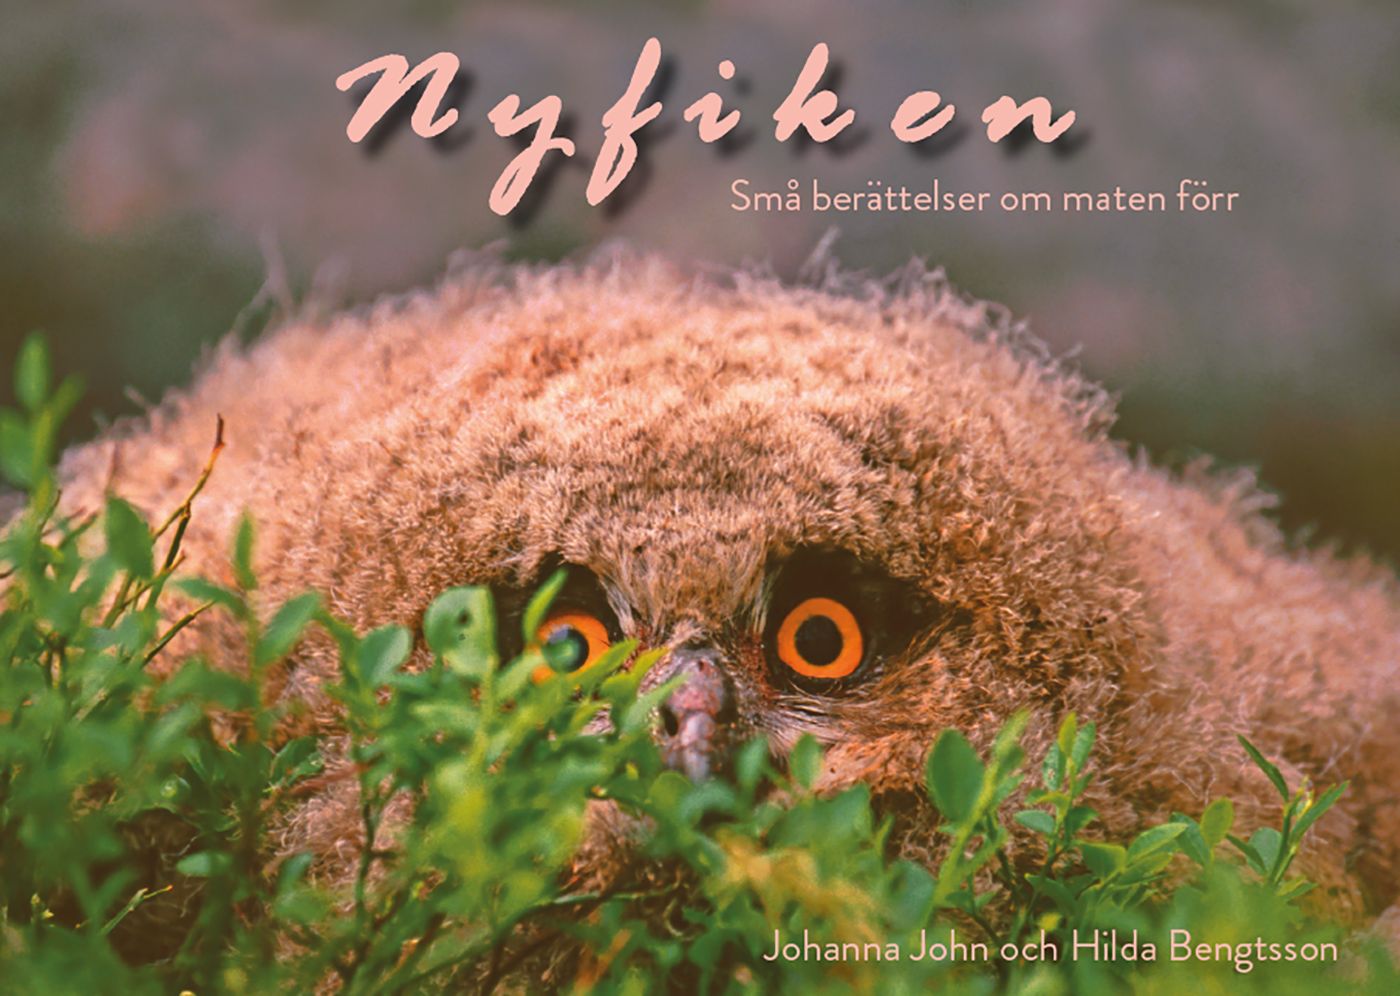 Nyfiken, eBook by Hilda Bengtsson, Johanna John